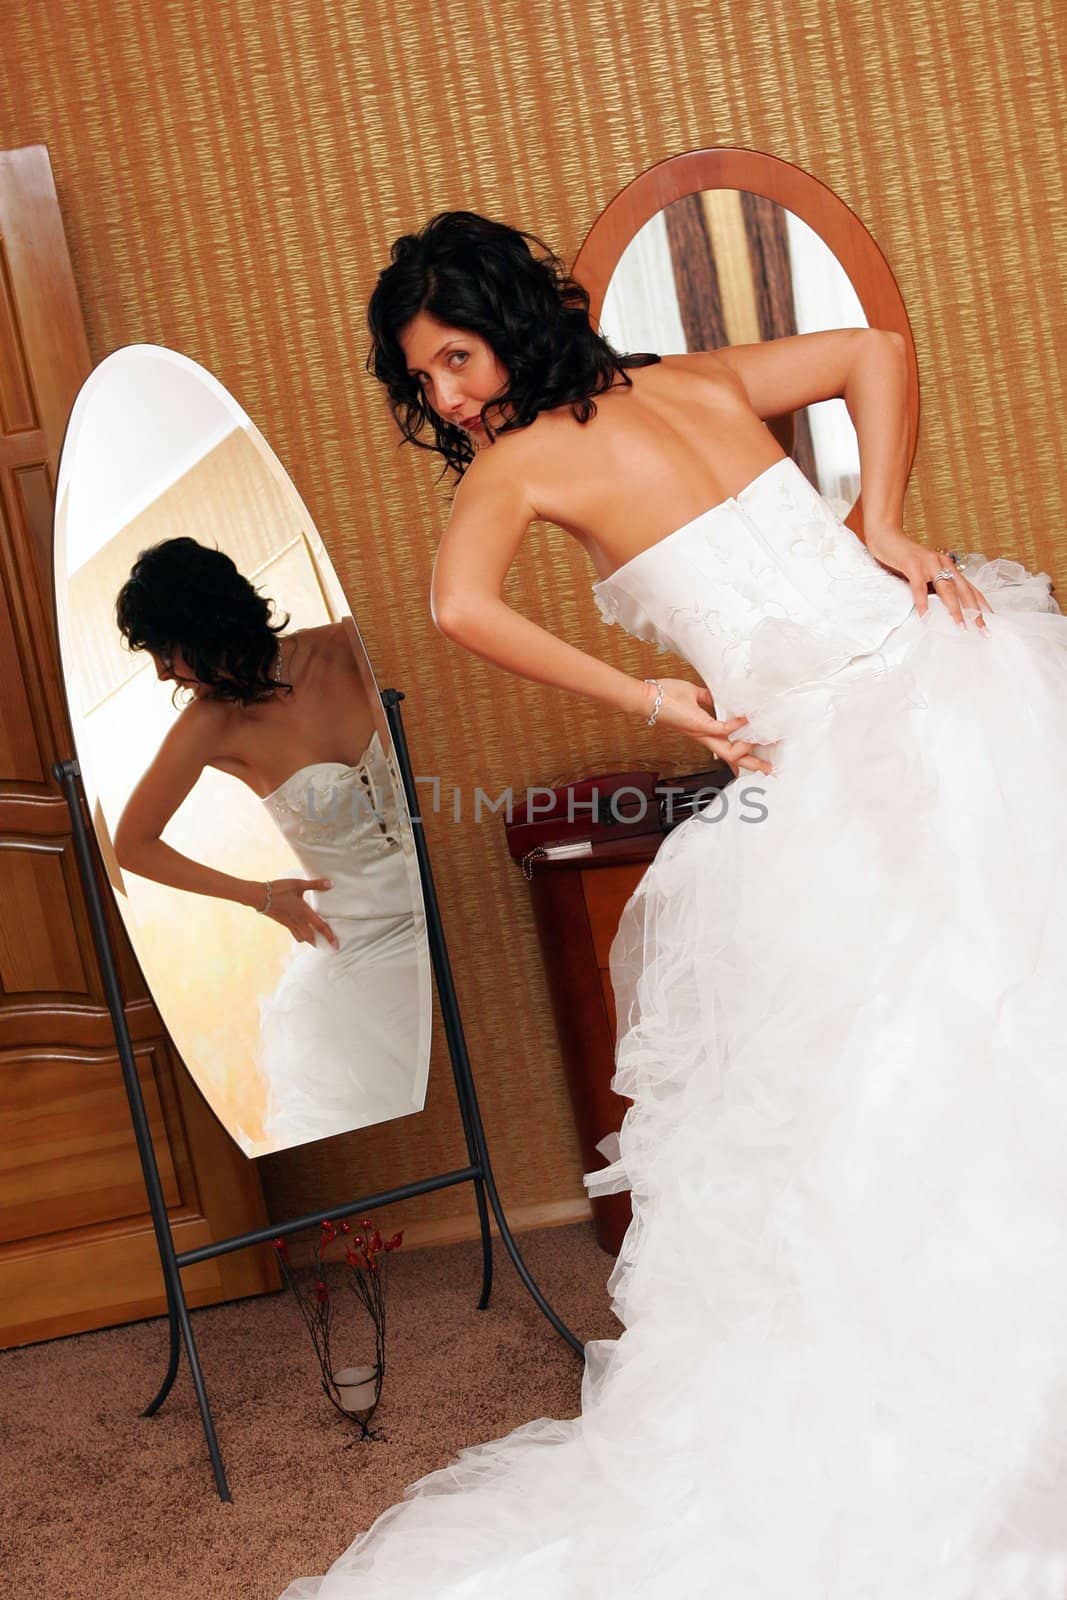 Bride trying on wedding dress by speedfighter